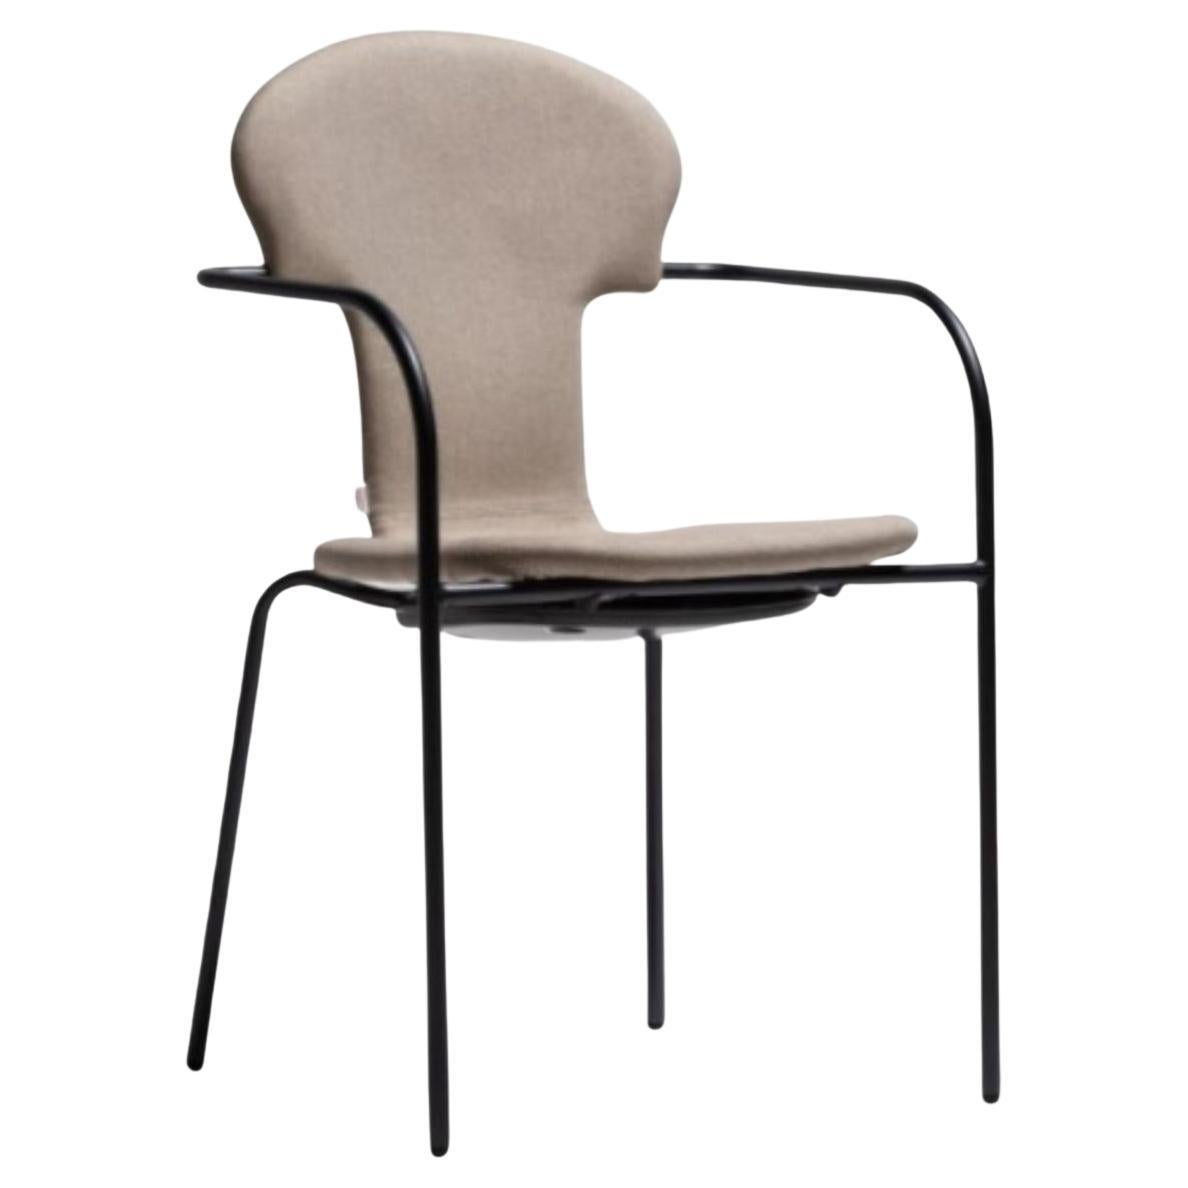 Brauner Minivarius-Stuhl von Oscar Tusquets